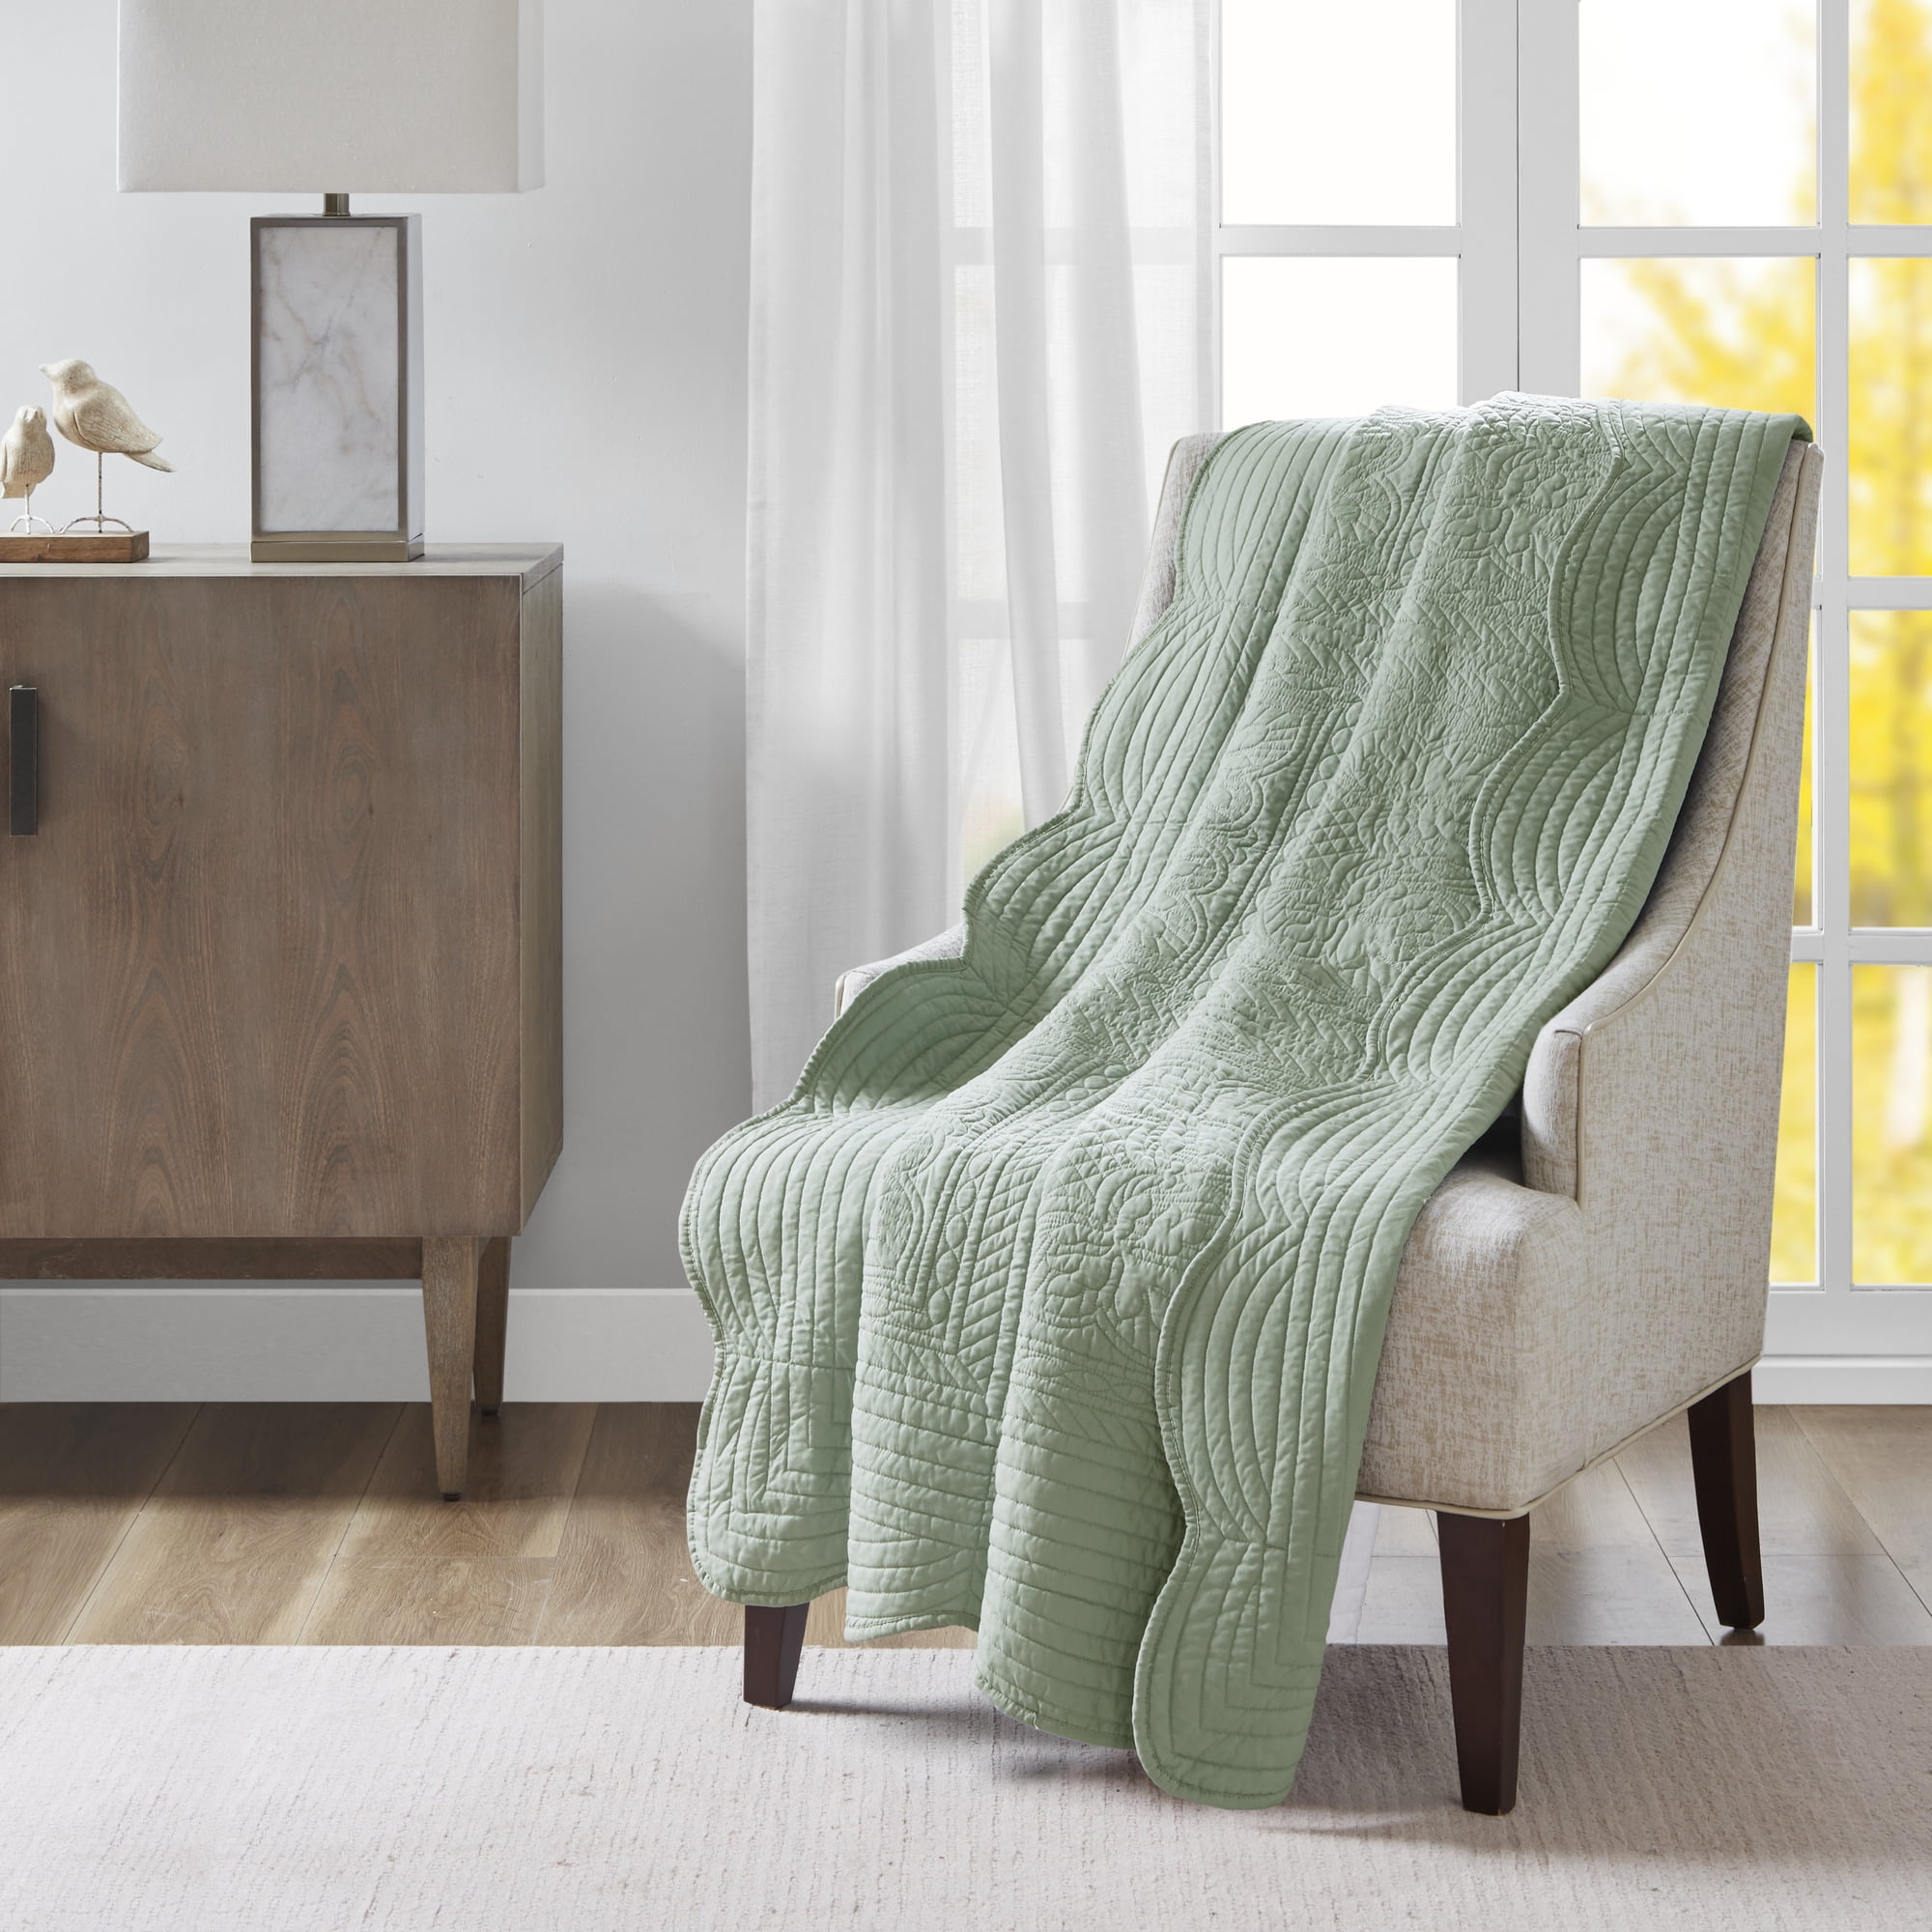 Good Heavy Quality Sofa/ Chair Throw in Natural or Grey Colour 127cms x 152cms 